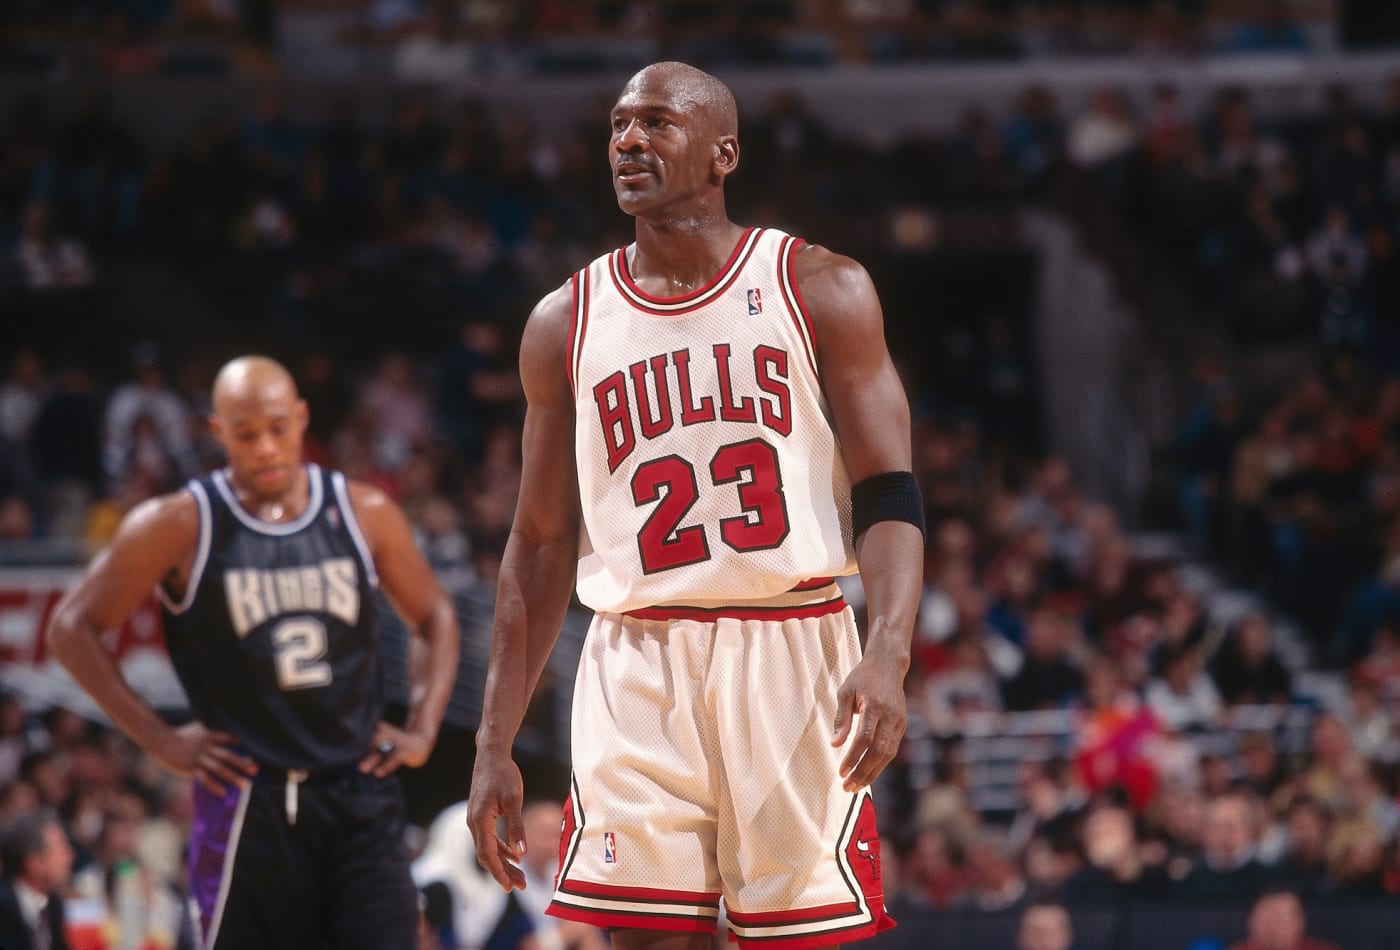 Michael Jordan on the court